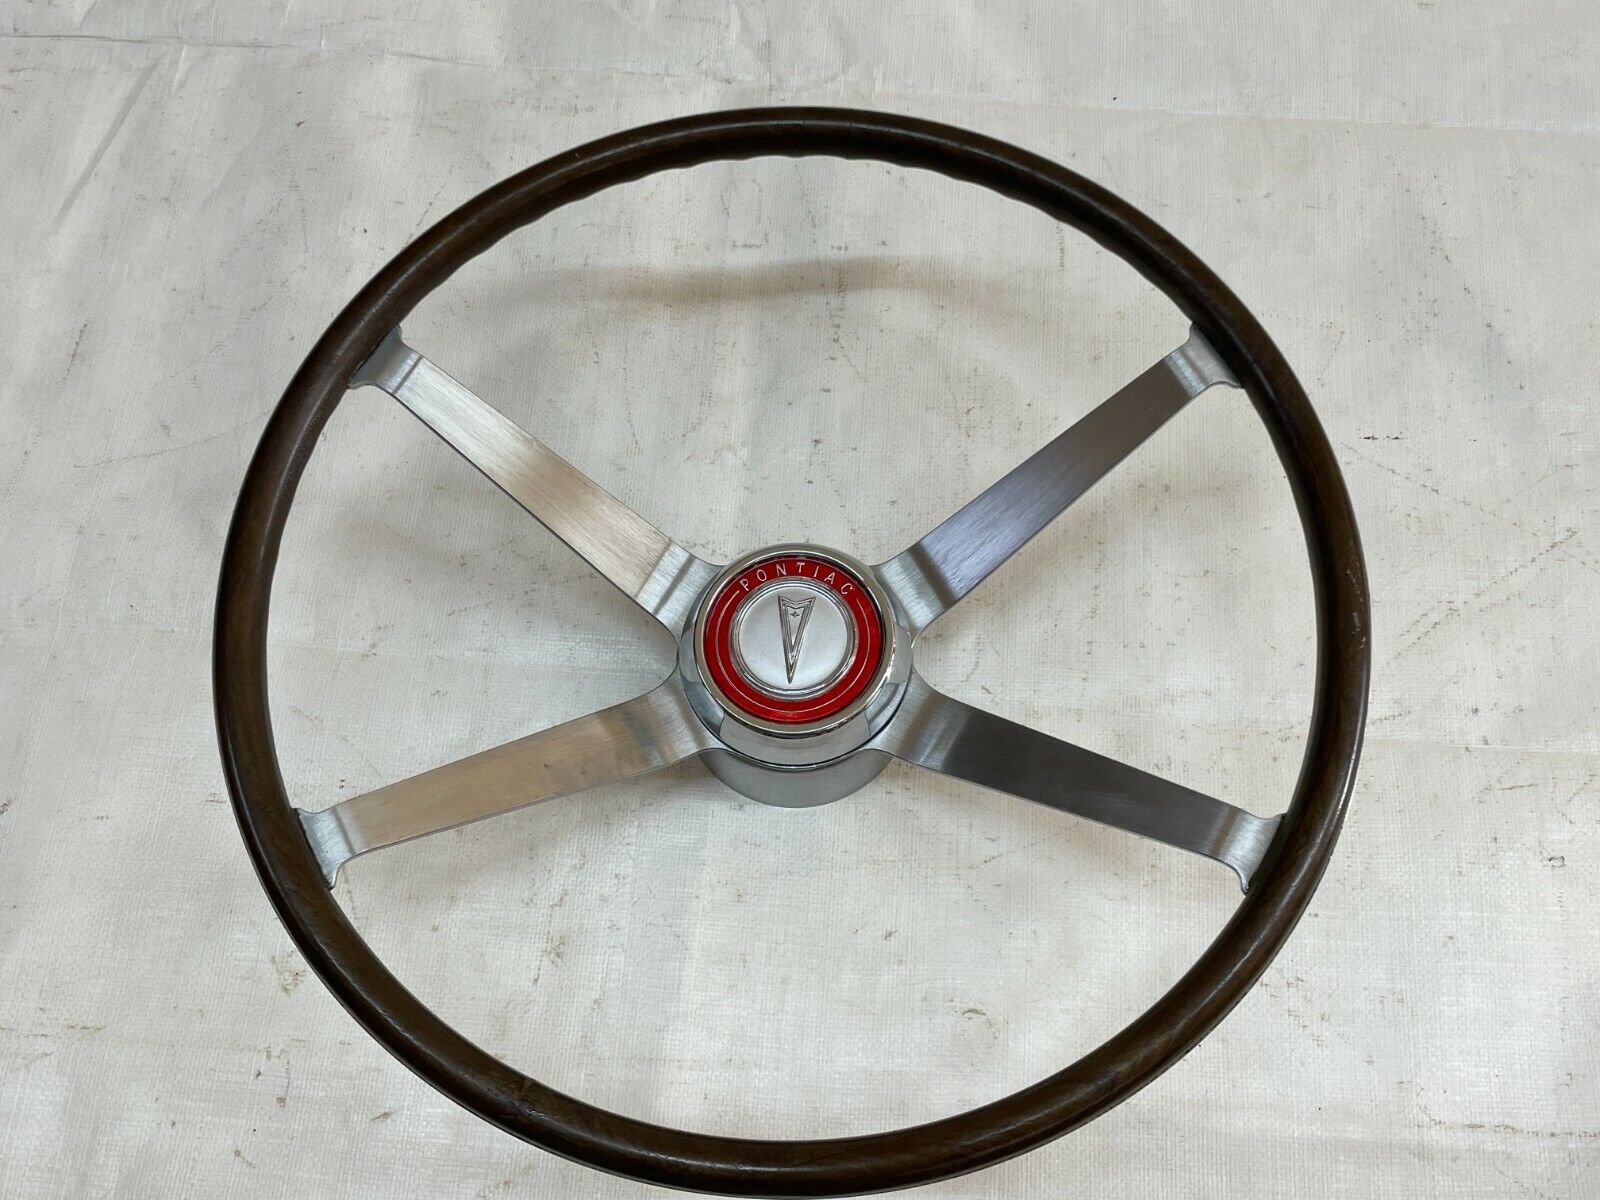 1964 GTO Steering Wheel Four Spoke Wood Grain Rim Pontiac Catalina Grand Prix